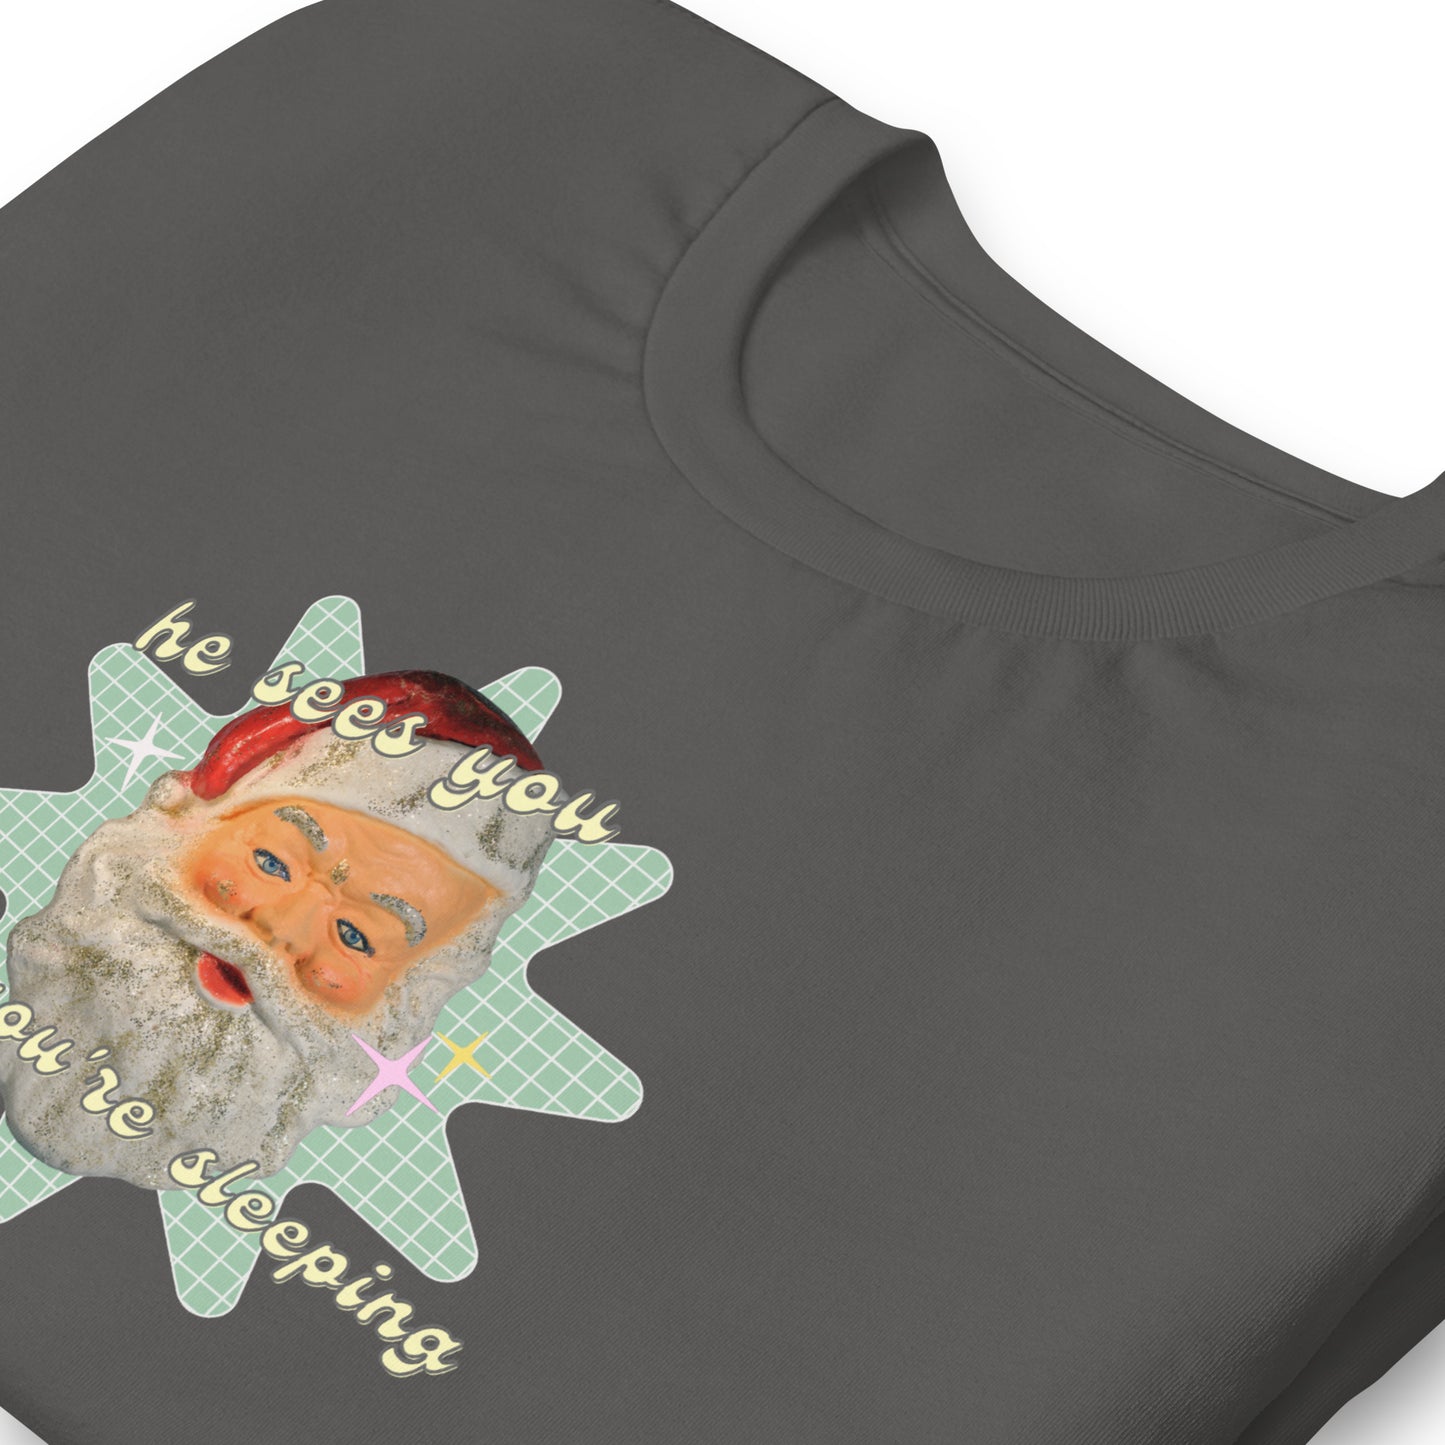 Creepy Santa Christmas T-Shirt | Funny and Eerie Holiday Tee